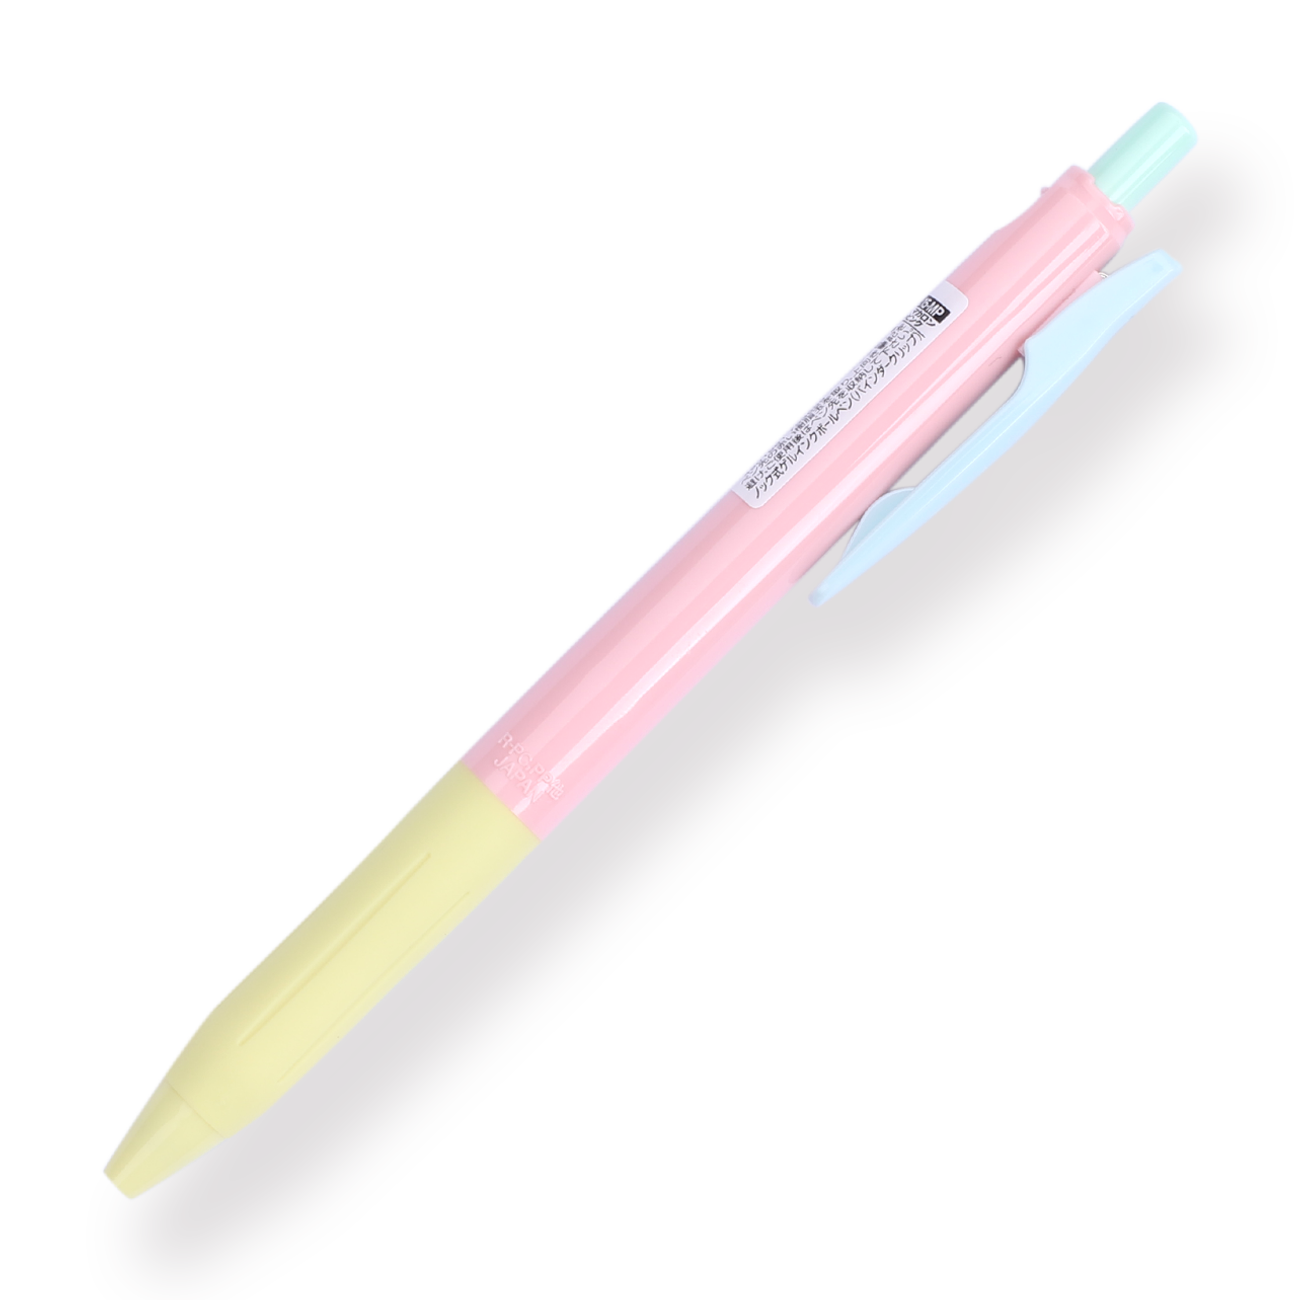 Zebra Rainbow Retractable Gel Pen 0.5mm - 8 color Set — Stationery Pal